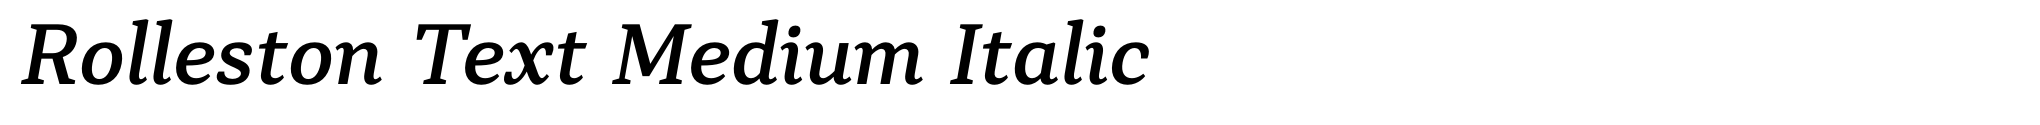 Rolleston Text Medium Italic image